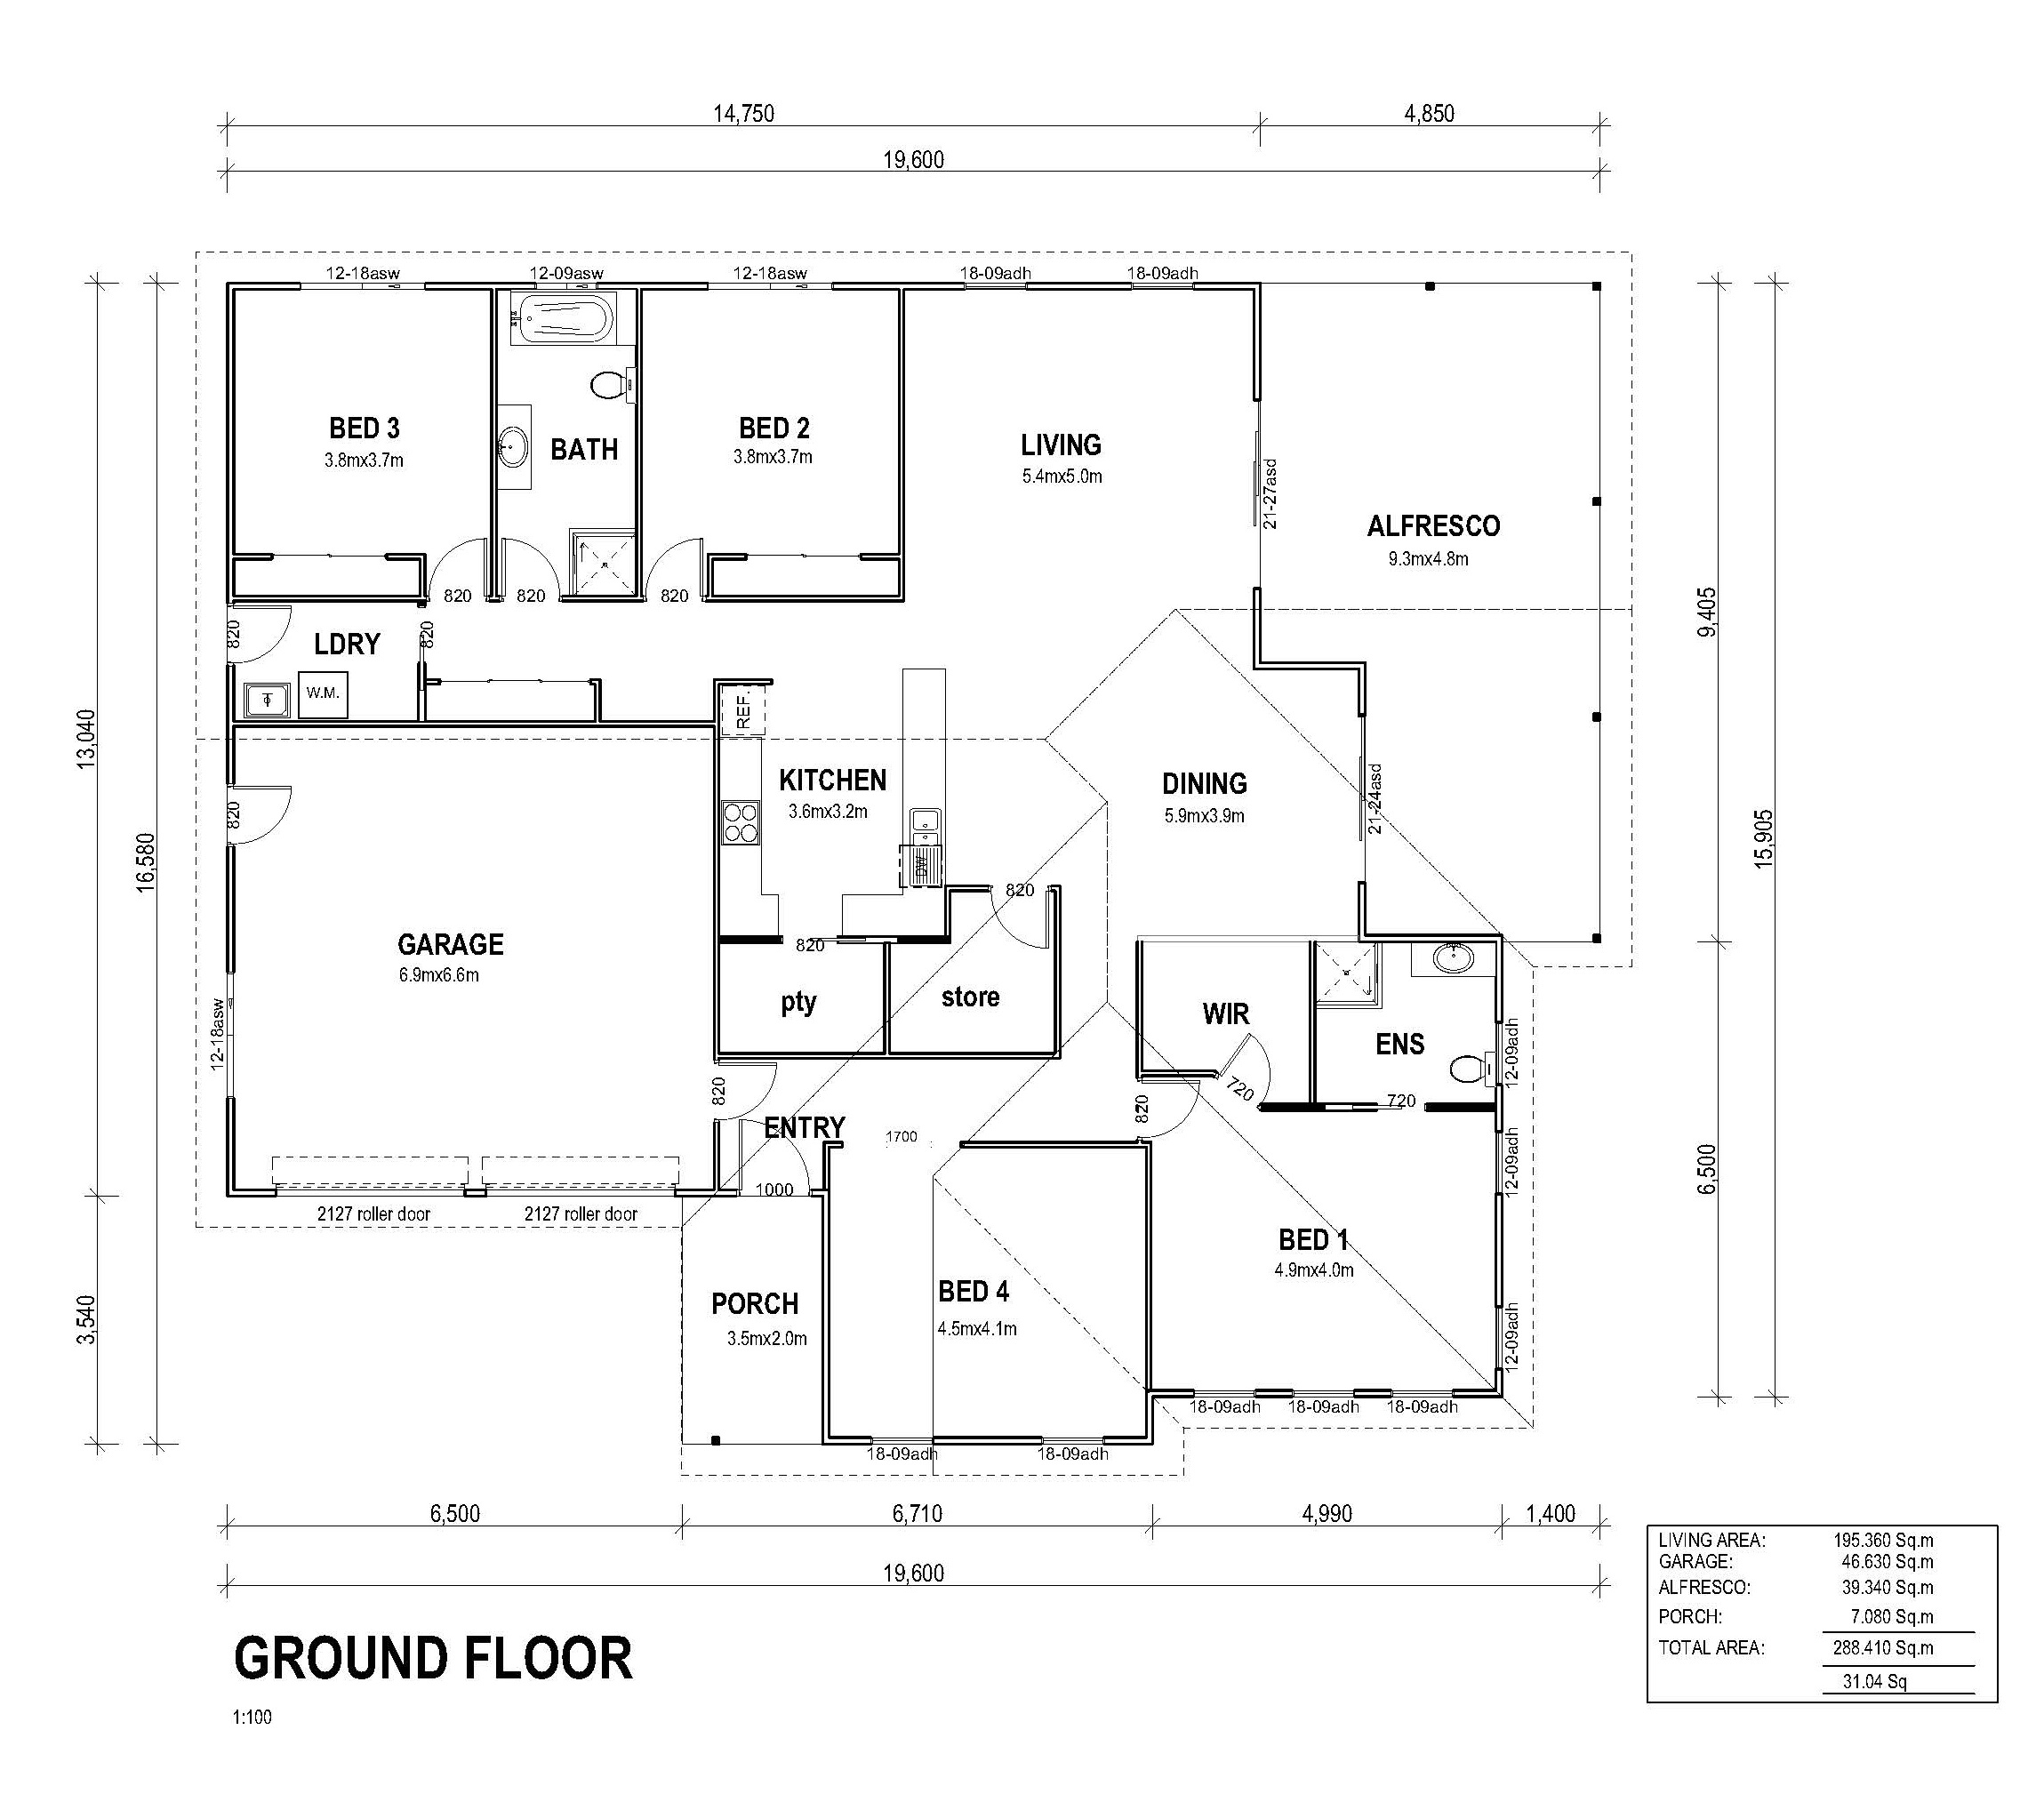 Sydney Floor Plan